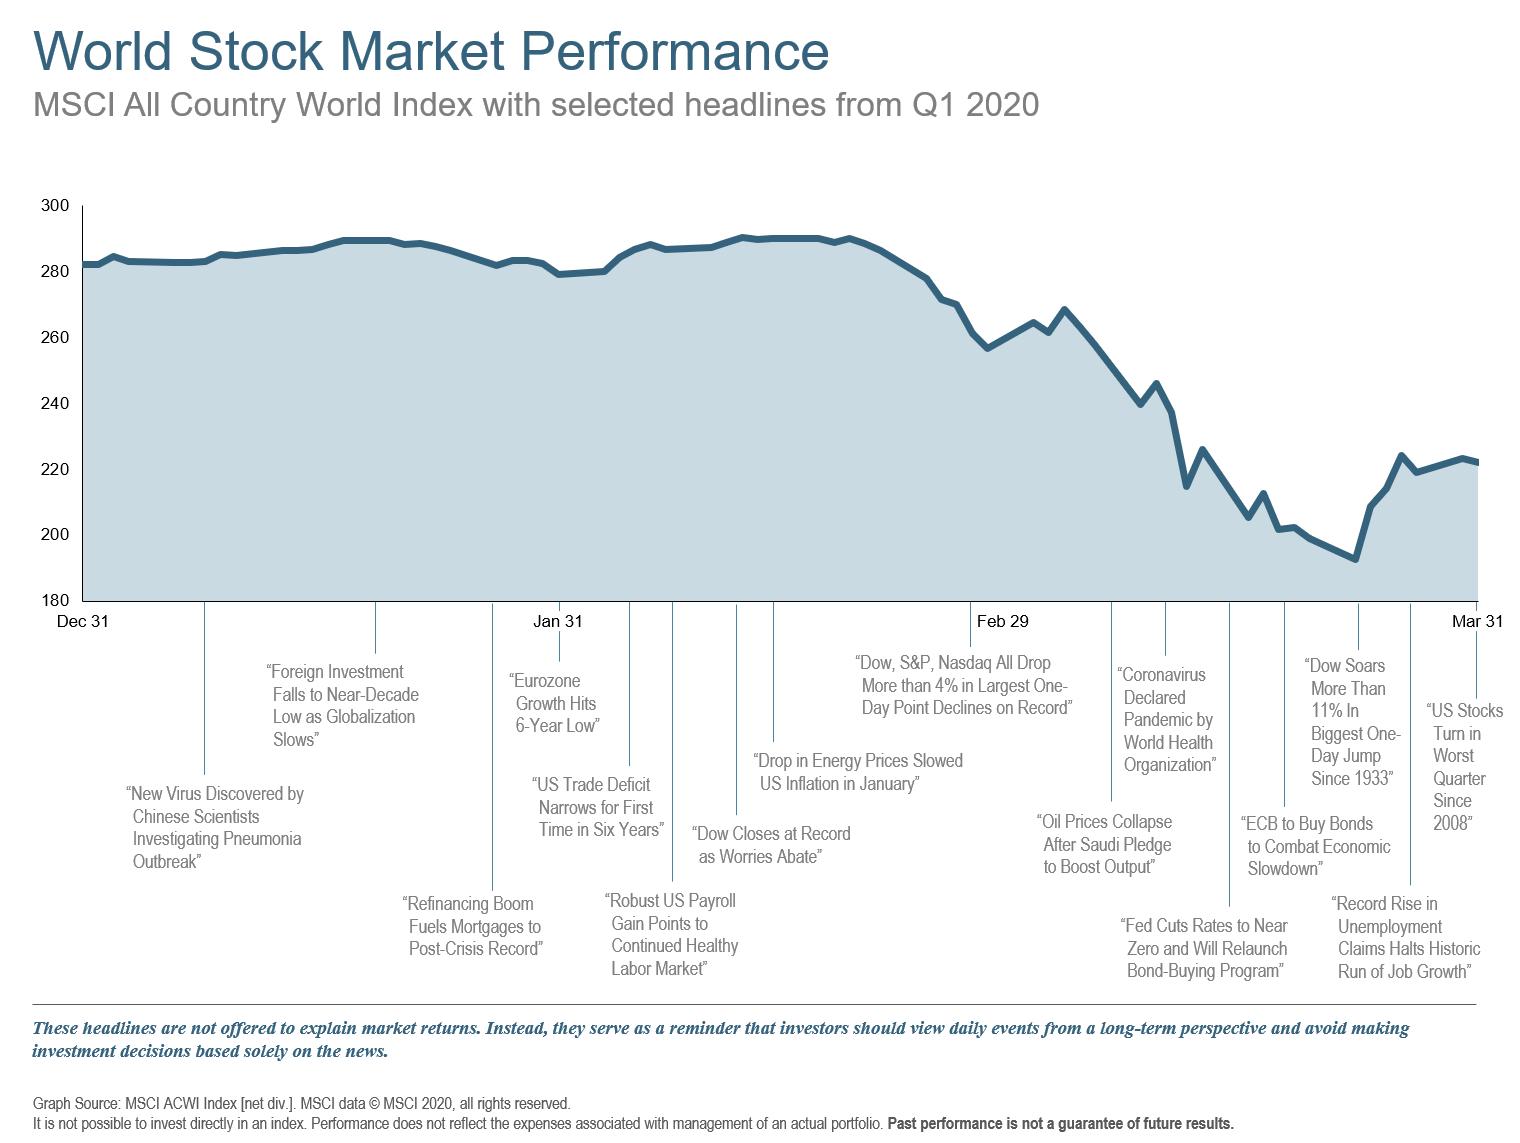 Q1 2020 World Stock Market Performance.png